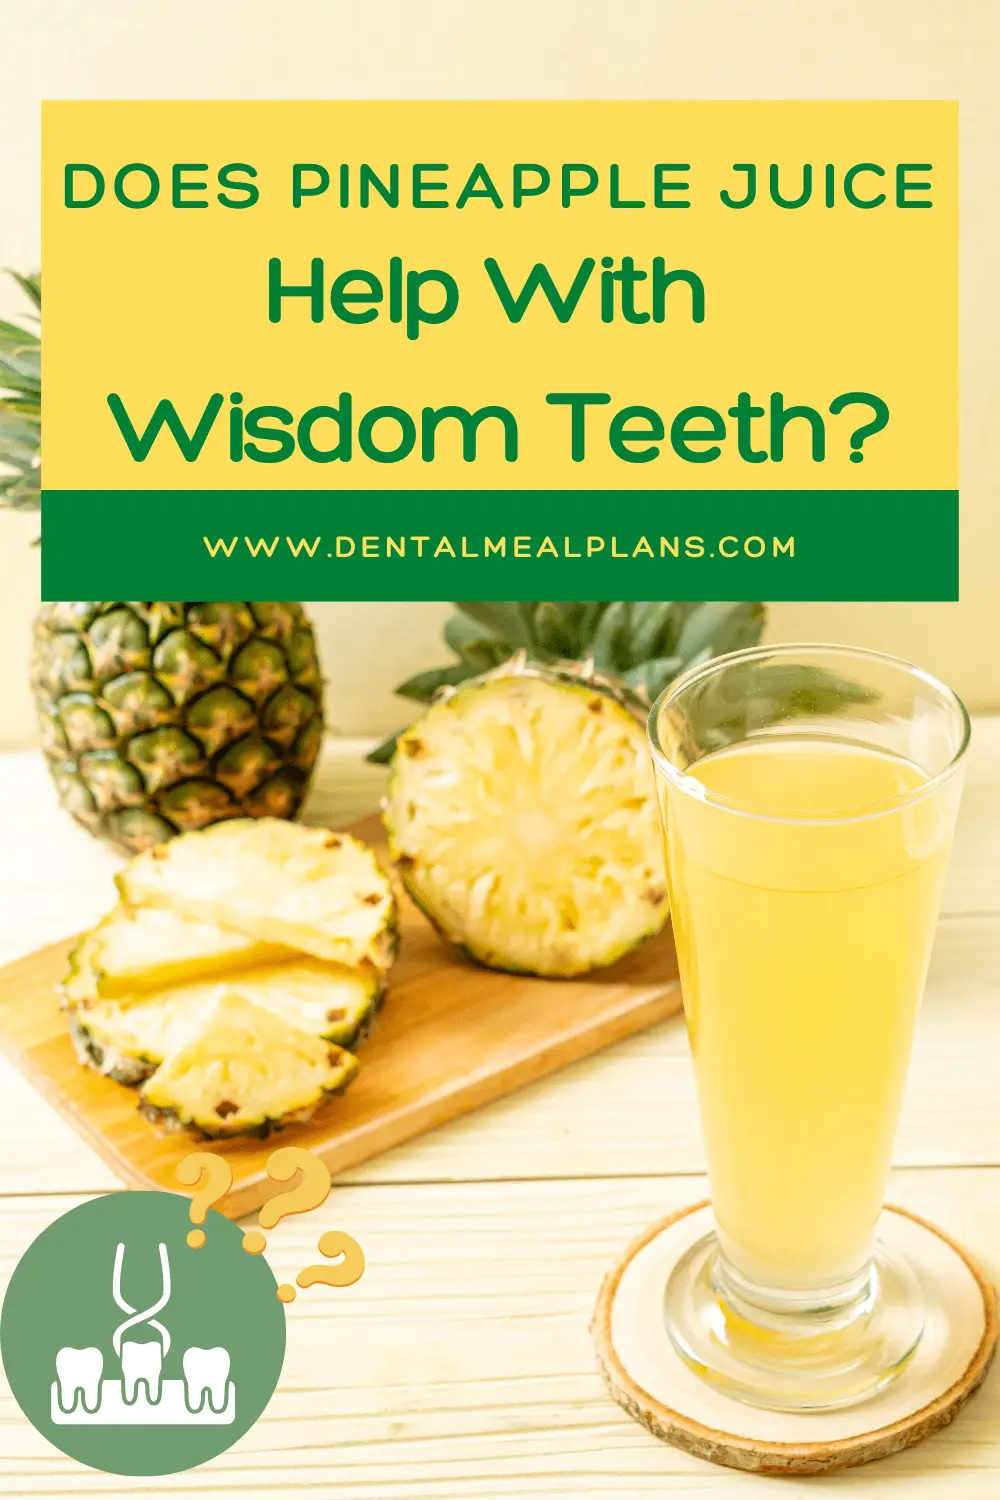 does pineapple juice help with wisdom teeth from www.dentalmealplans.com